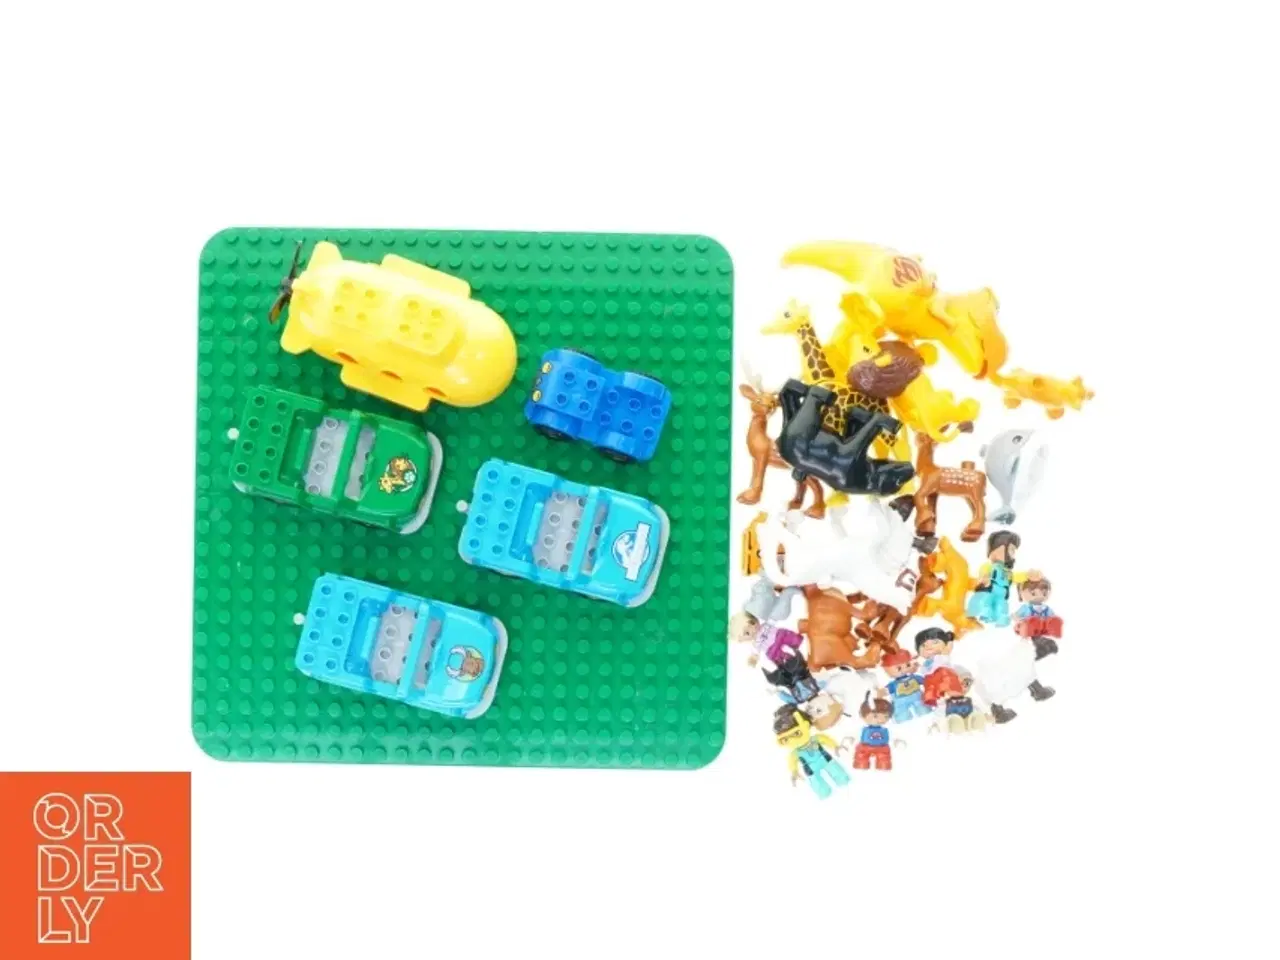 Billede 4 - Lego Duplo: Juressic Park, ubåd & Dykkere, Safari, Skov Ranger mm (str. Den store grønne plade er 38 x 38 cm)